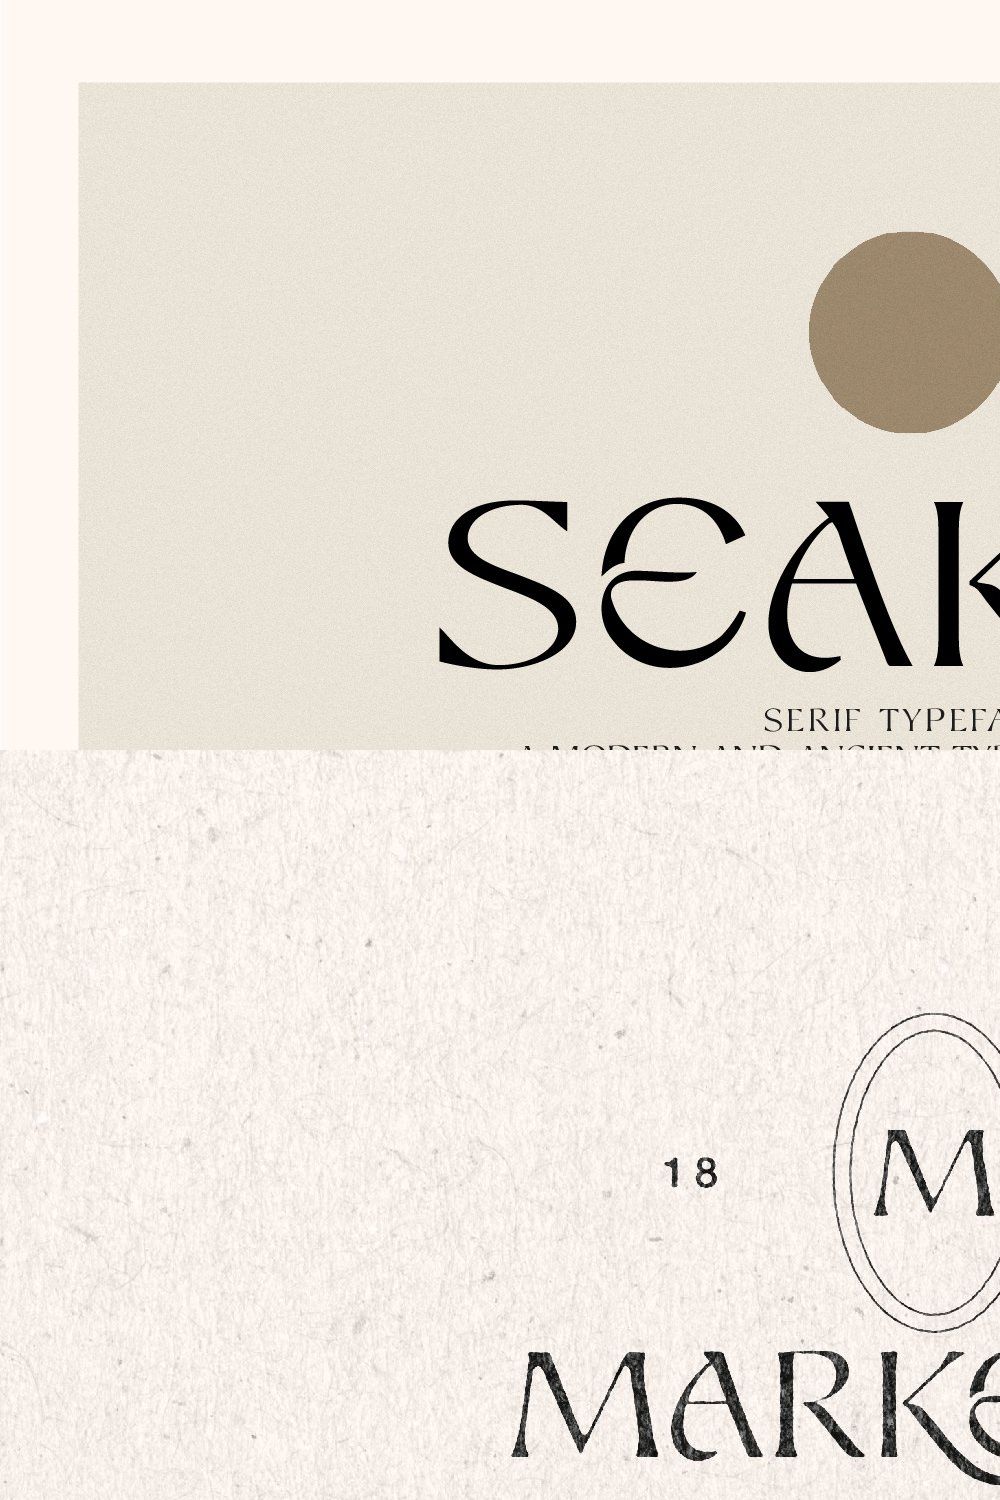 Seaker - Serif Typeface pinterest preview image.